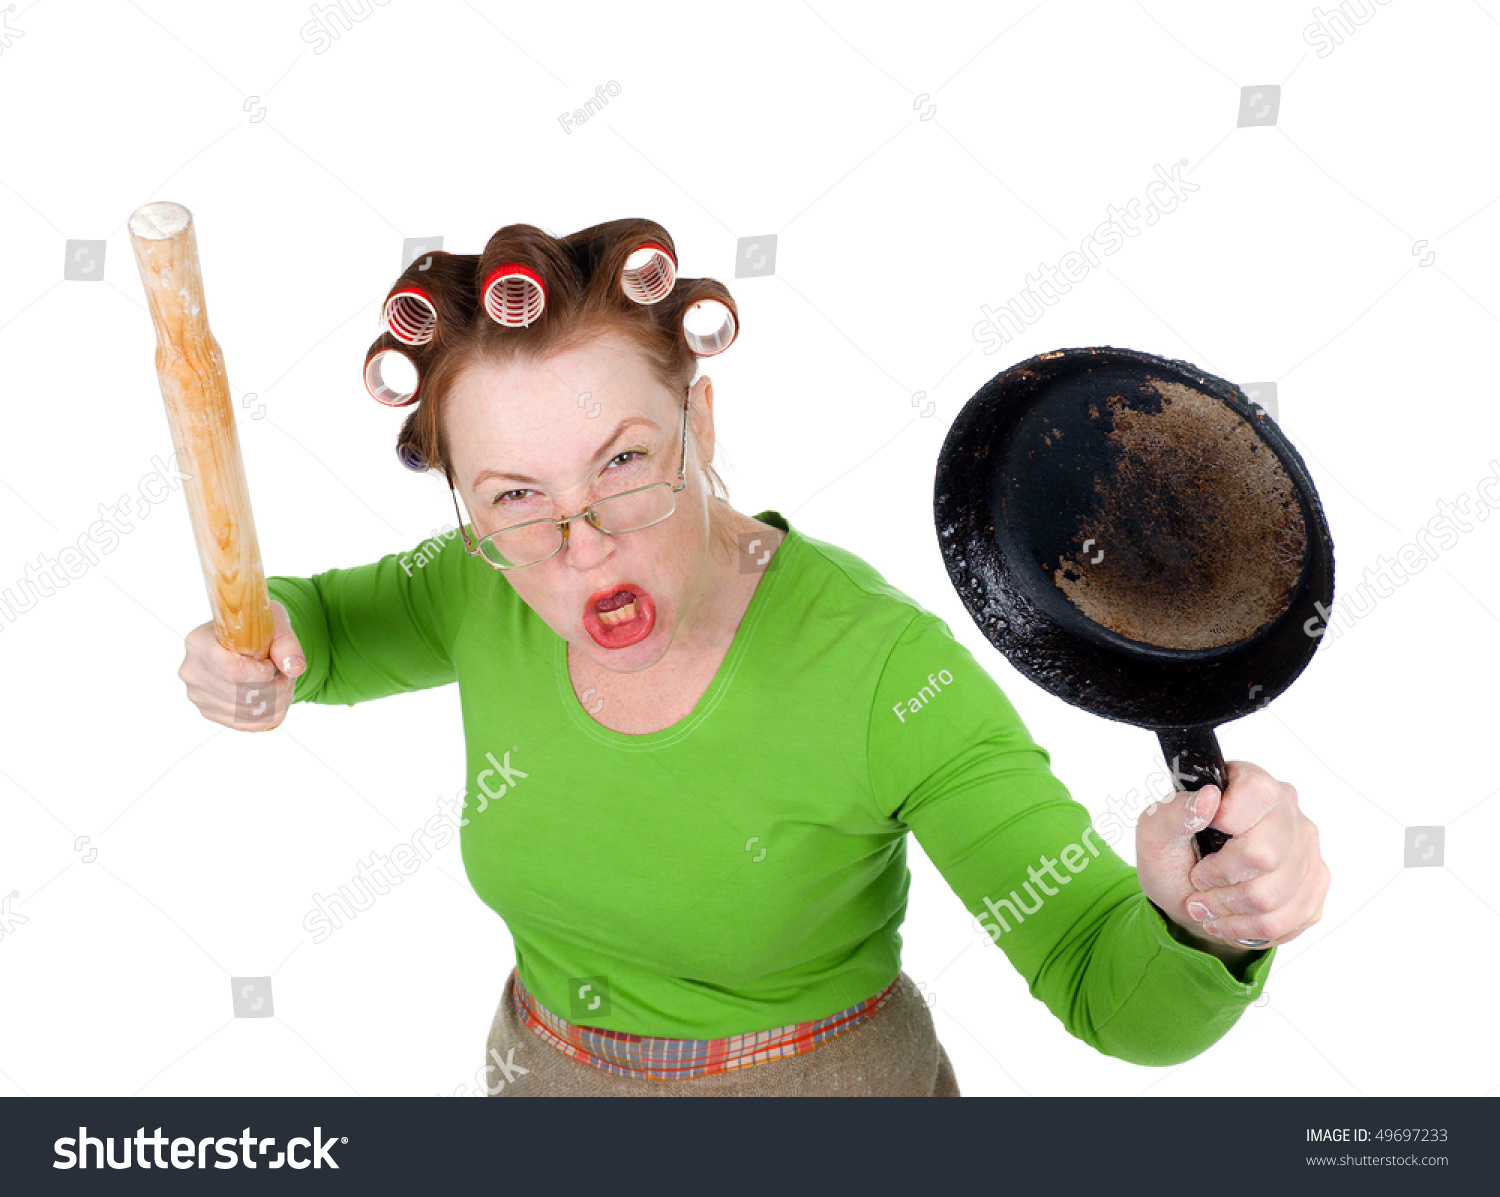 Удар сковородкой